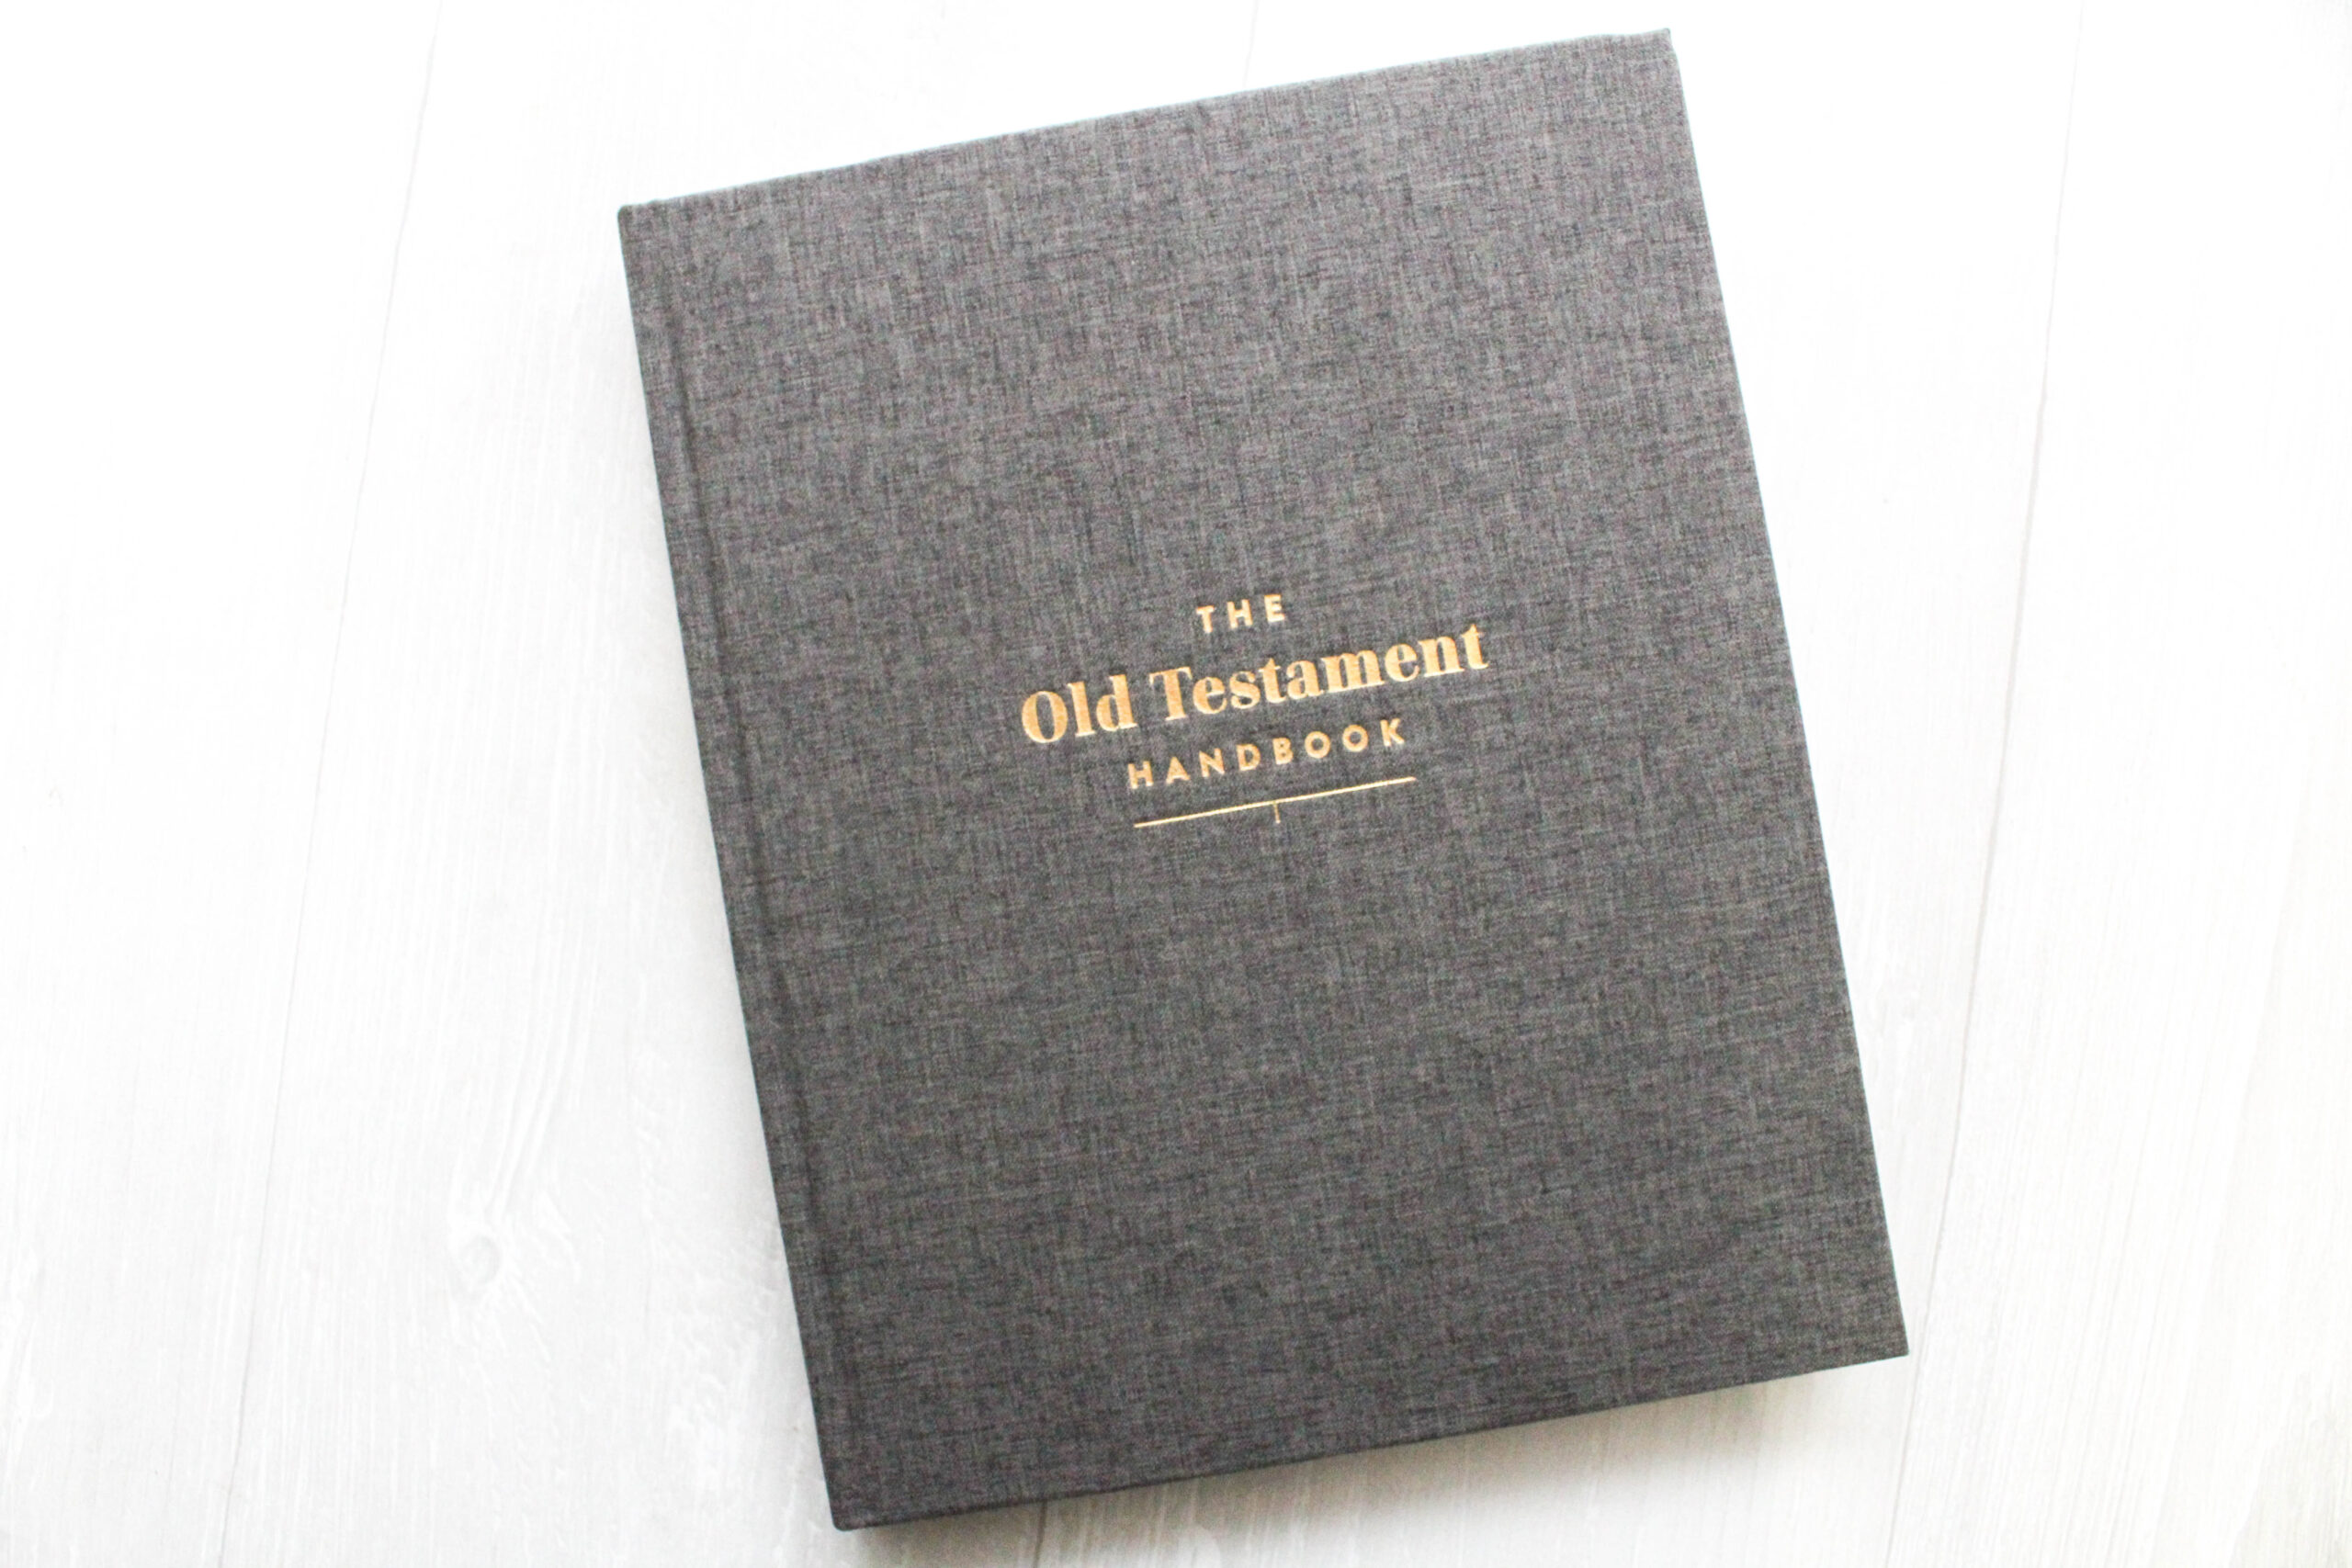 The Old Testament Handbook